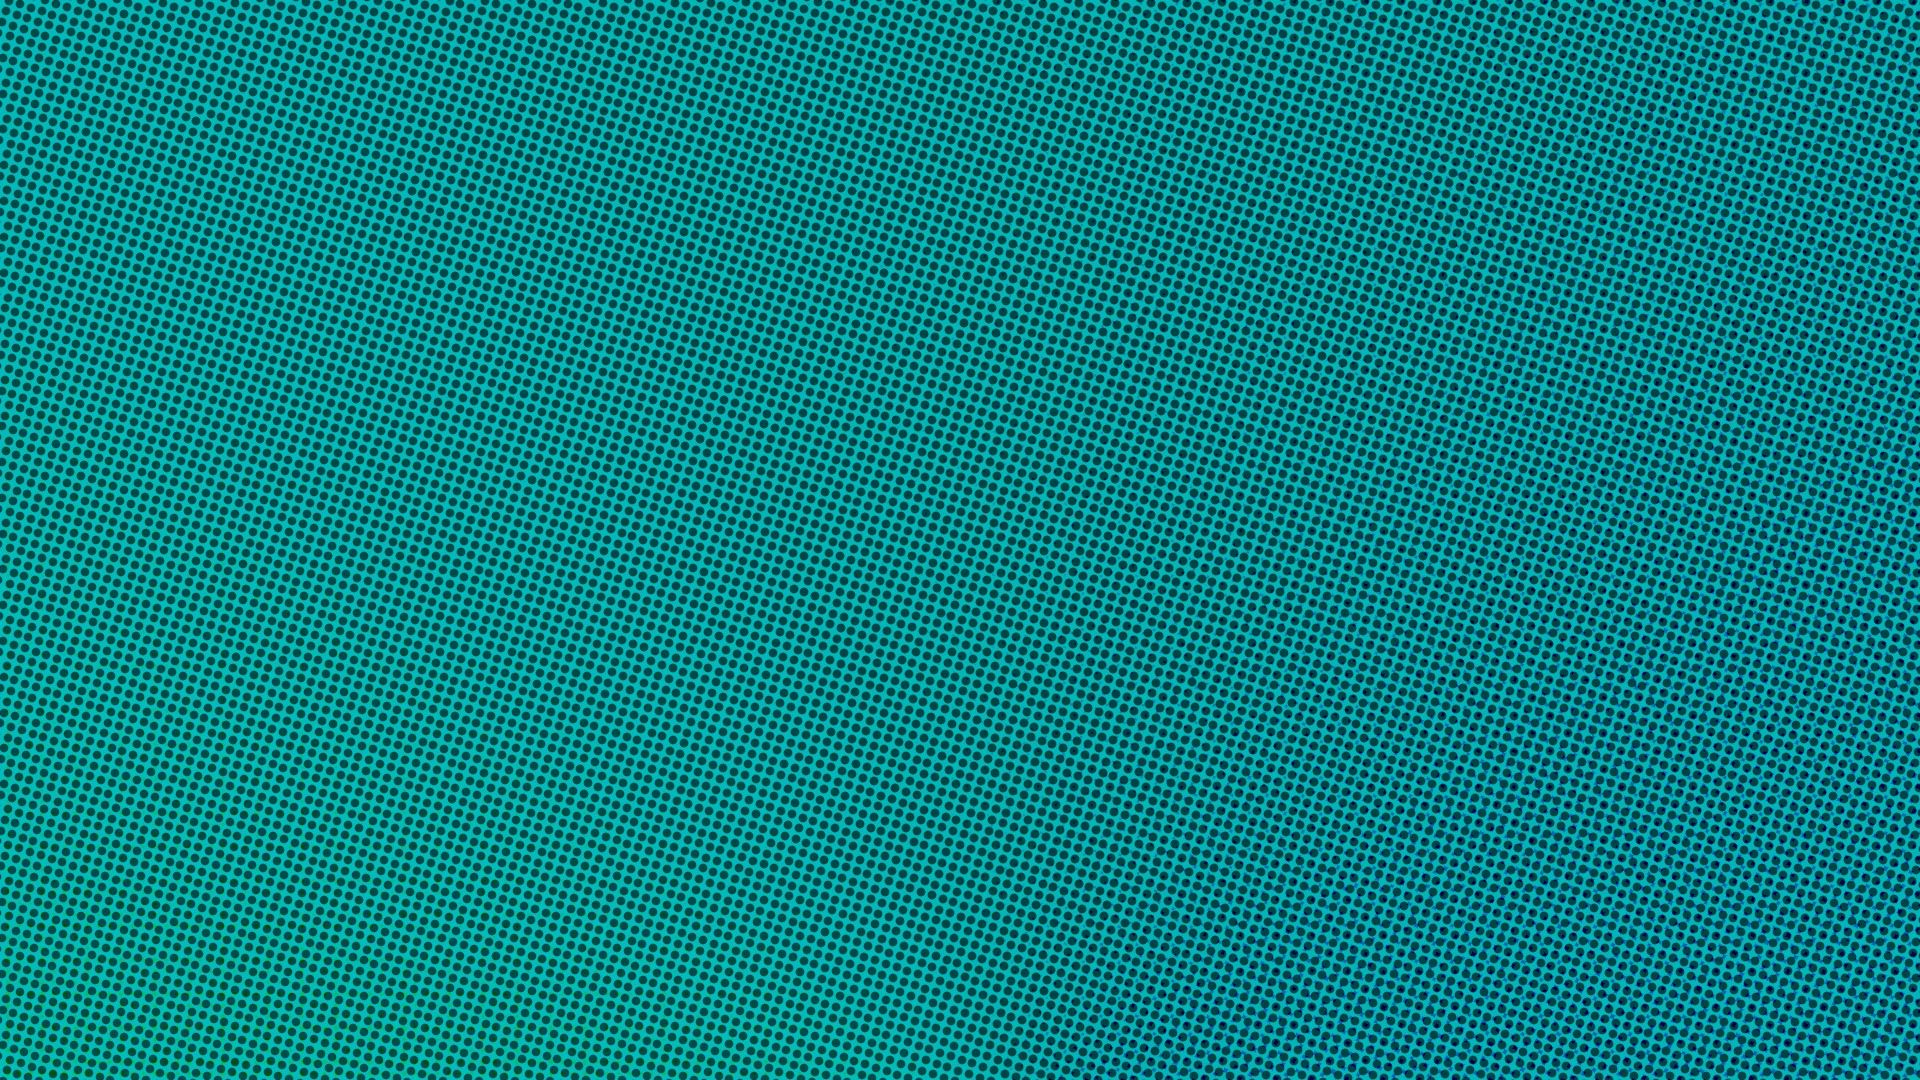 fondo de pantalla de puntos infinitos - HD Wallpapers: HD Wallpapers